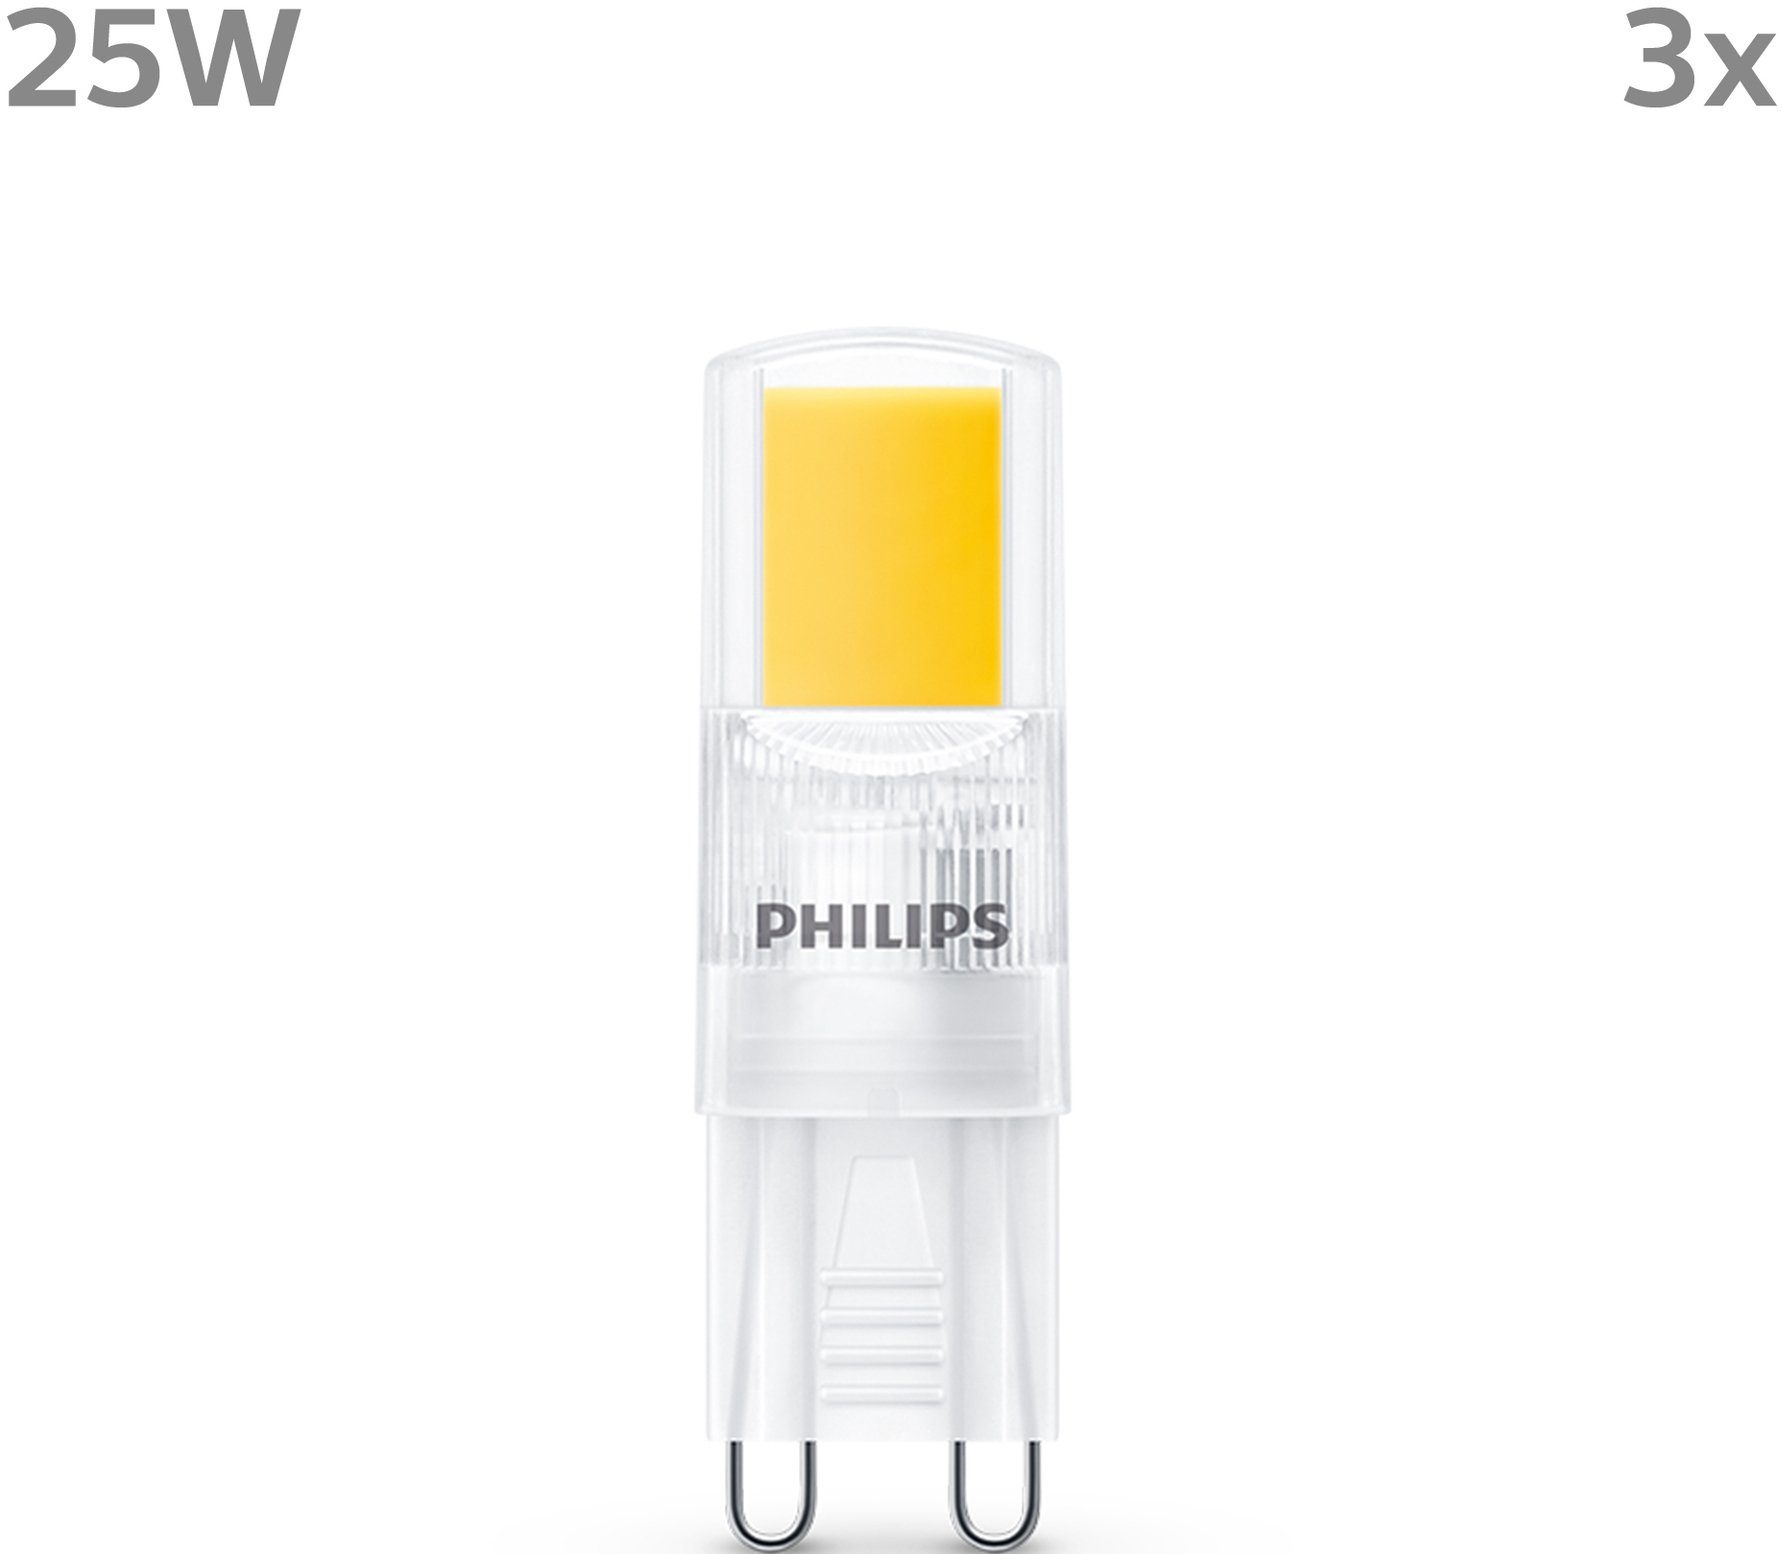 3er LED-Leuchtmittel non-dim 25W Warmweiß G9, Standard LED G9 Warmweiß Philips Brenner P,